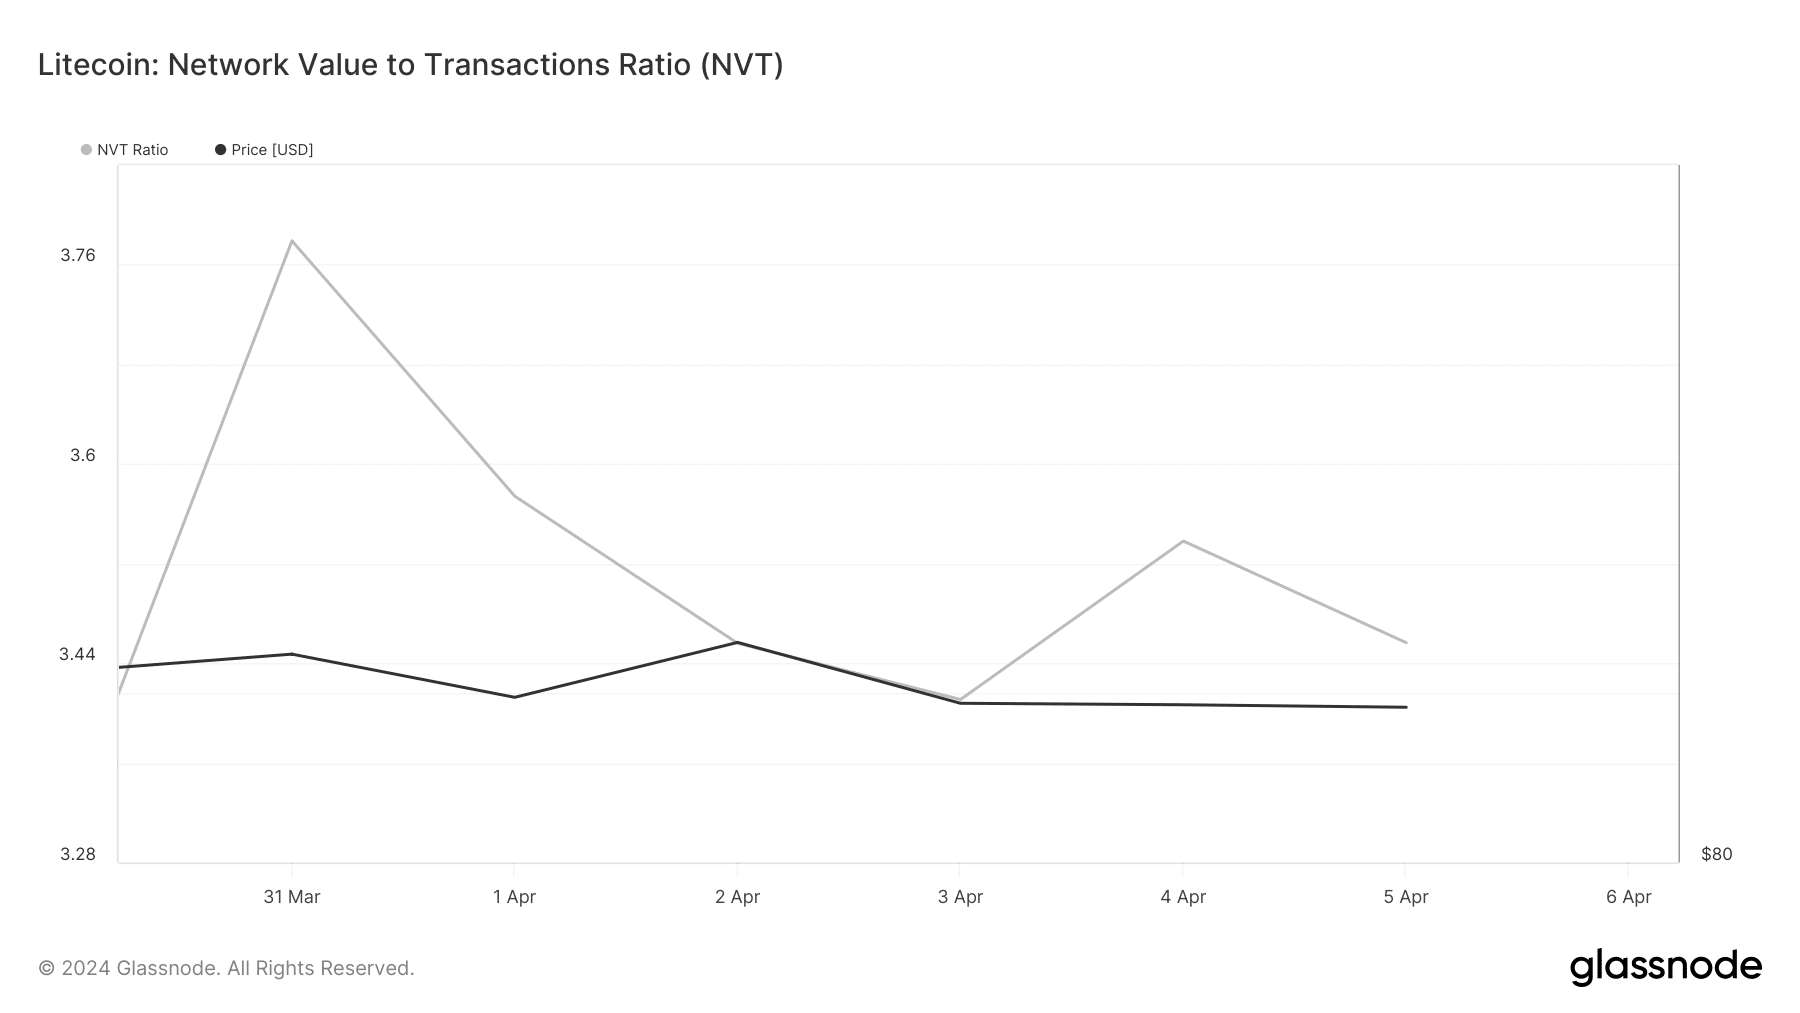 Litecoin's NVT Ratio declined